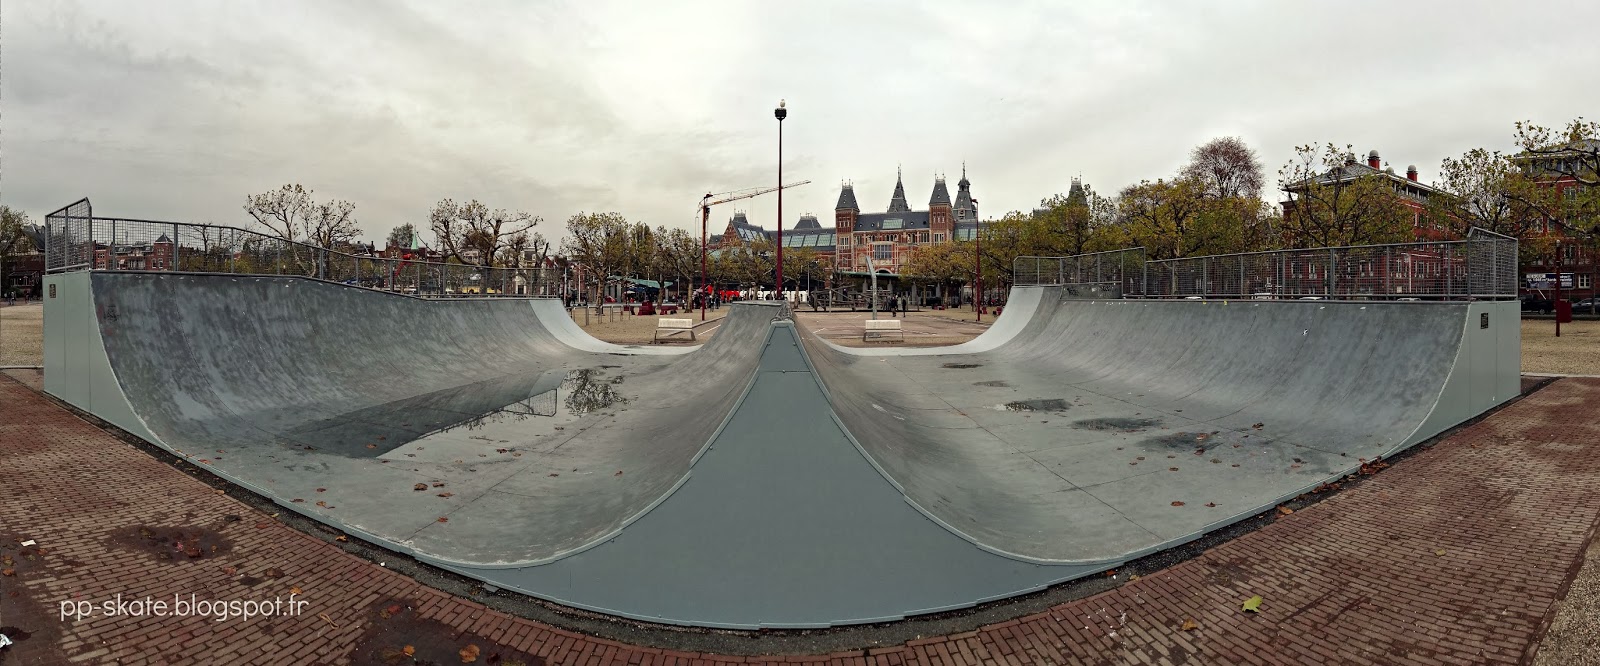 Skate park Amsterdam